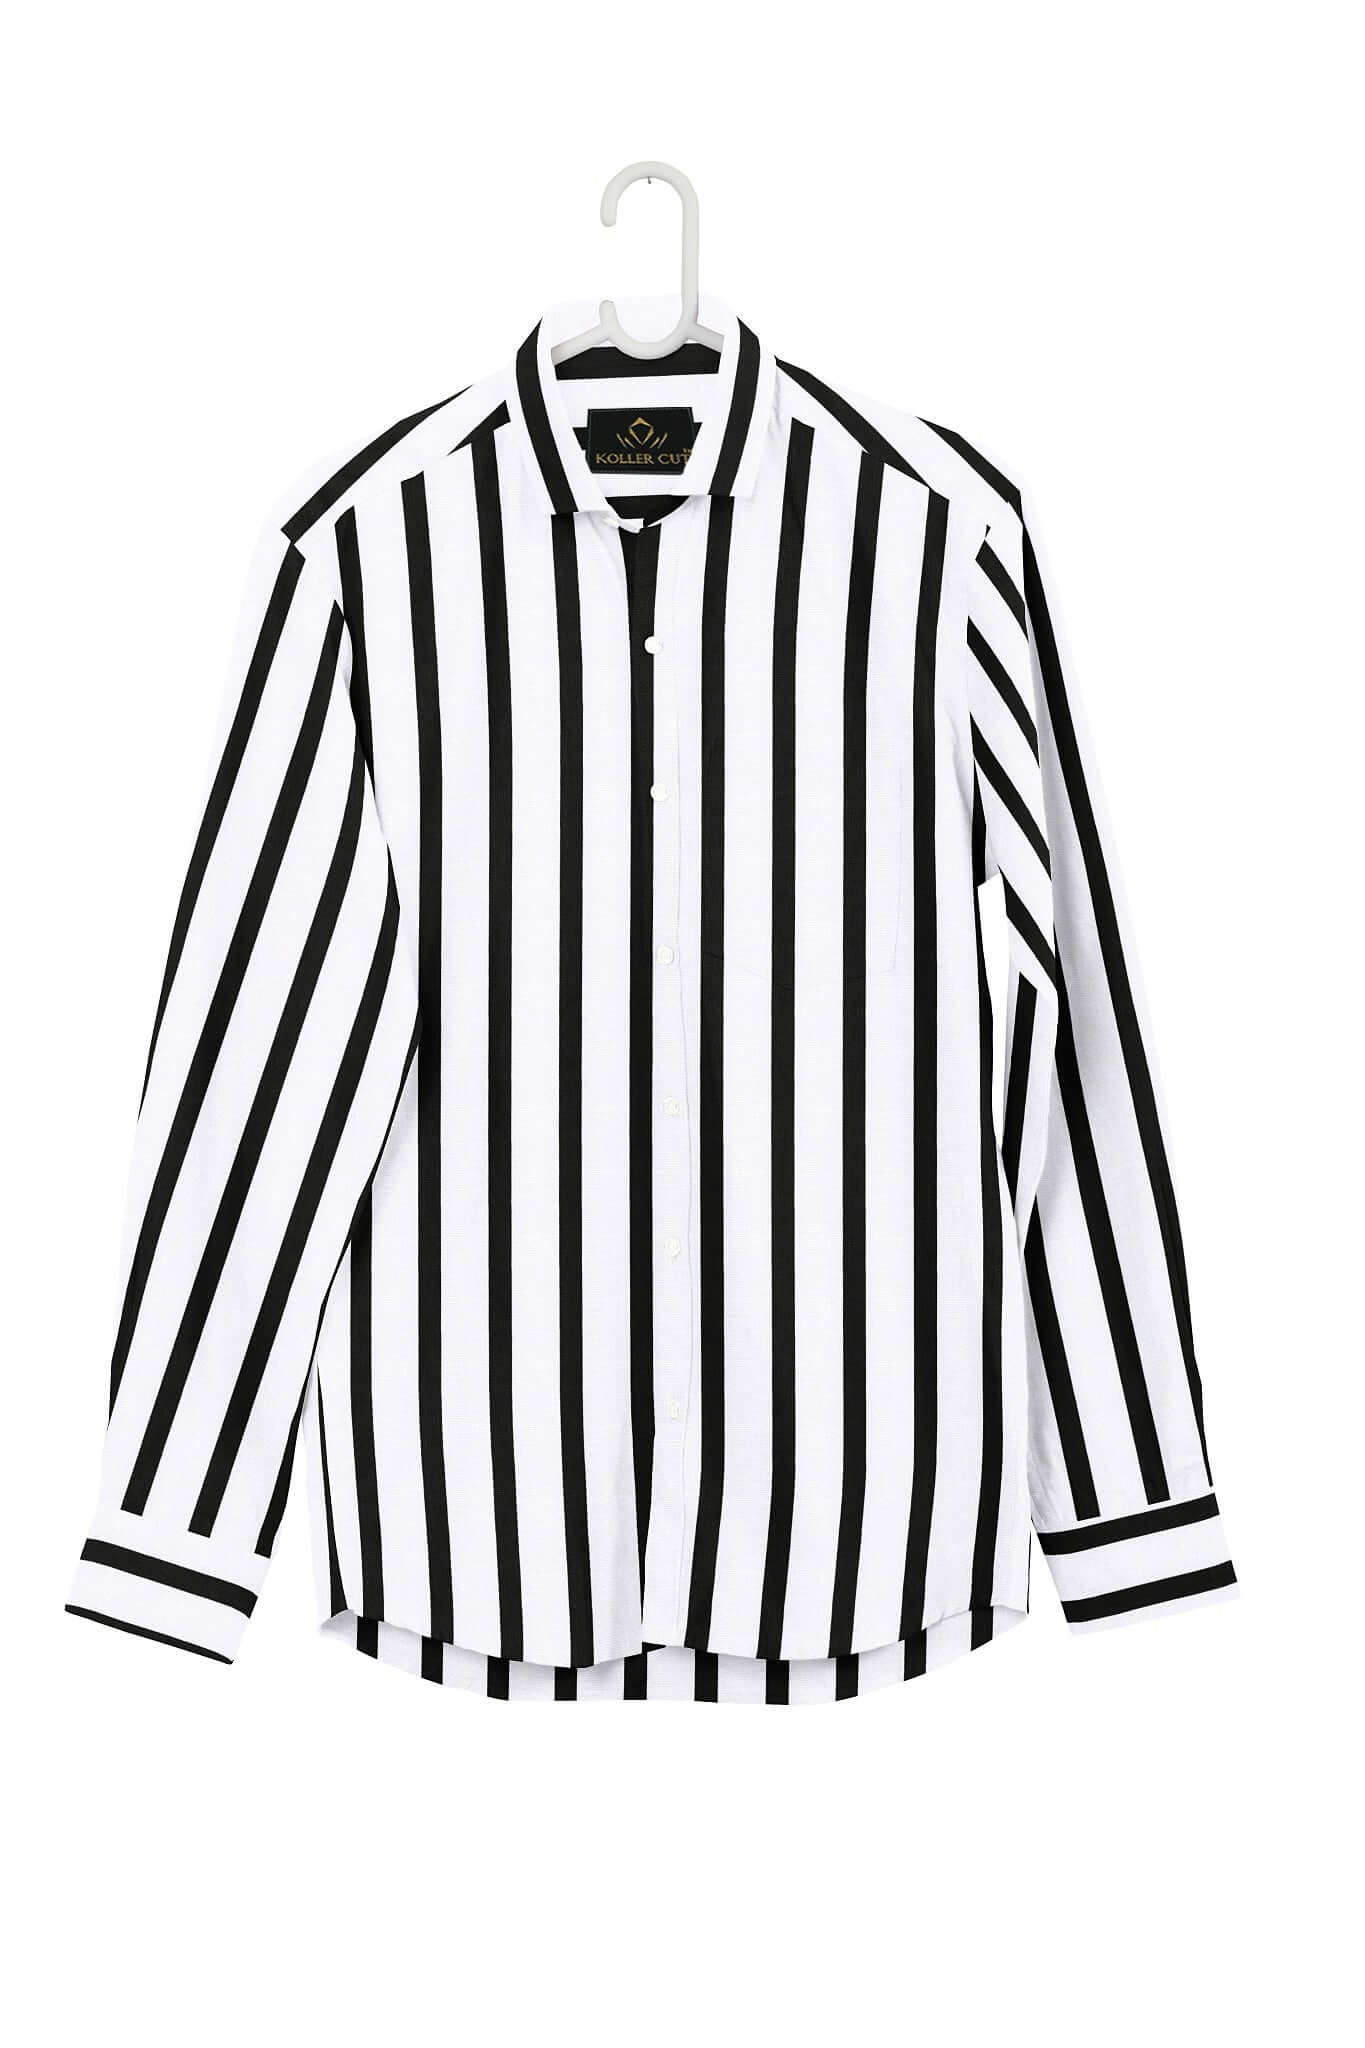 White and Jet Black Chalk Stripes Cotton Shirt